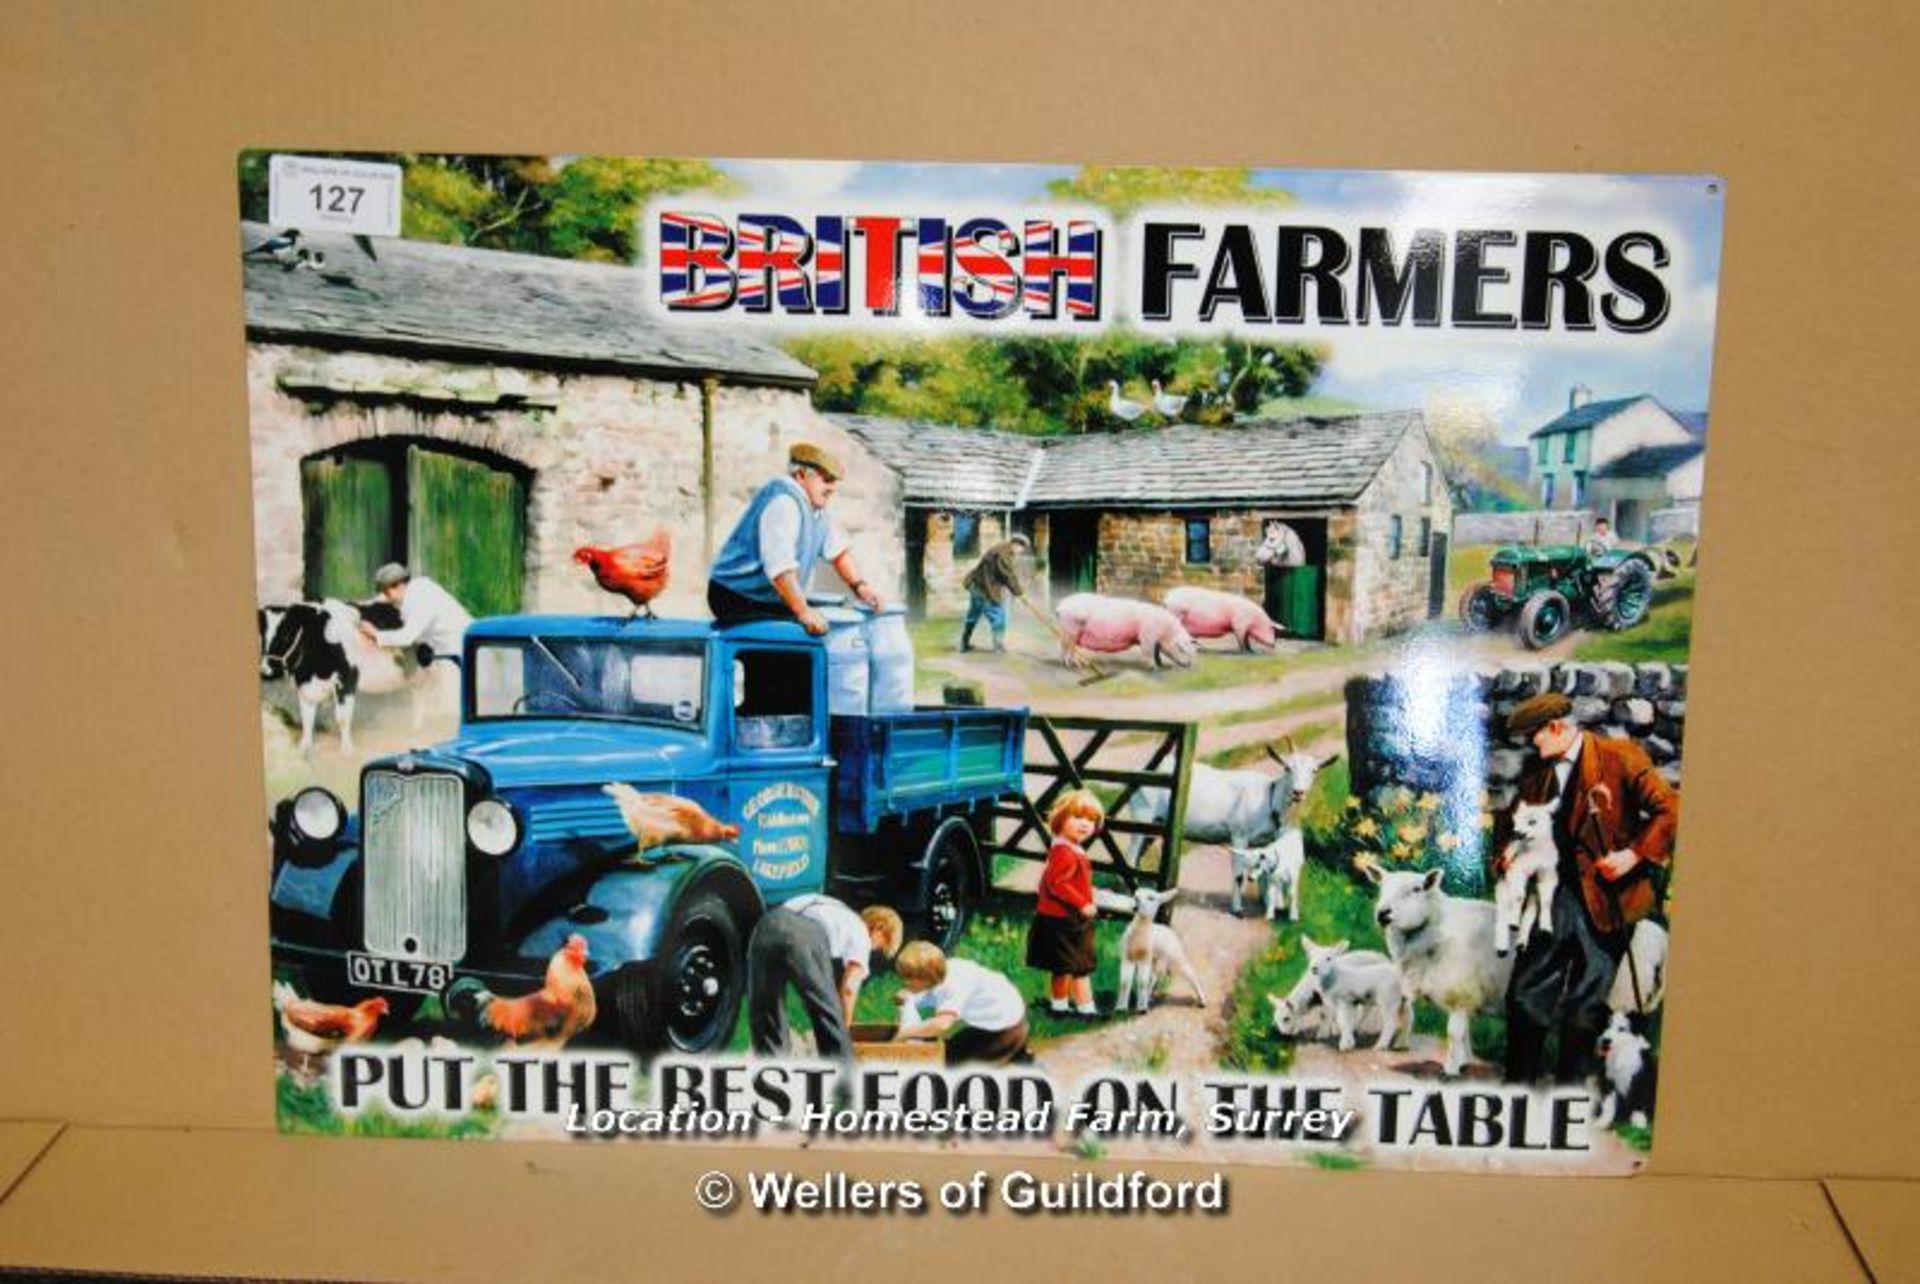 *BRITISH FARMERS PUT THE BEST FOOD ON THE TABLE (70CM X 50CM) [LOCATION: HOMESTEAD FARM - CALL THE